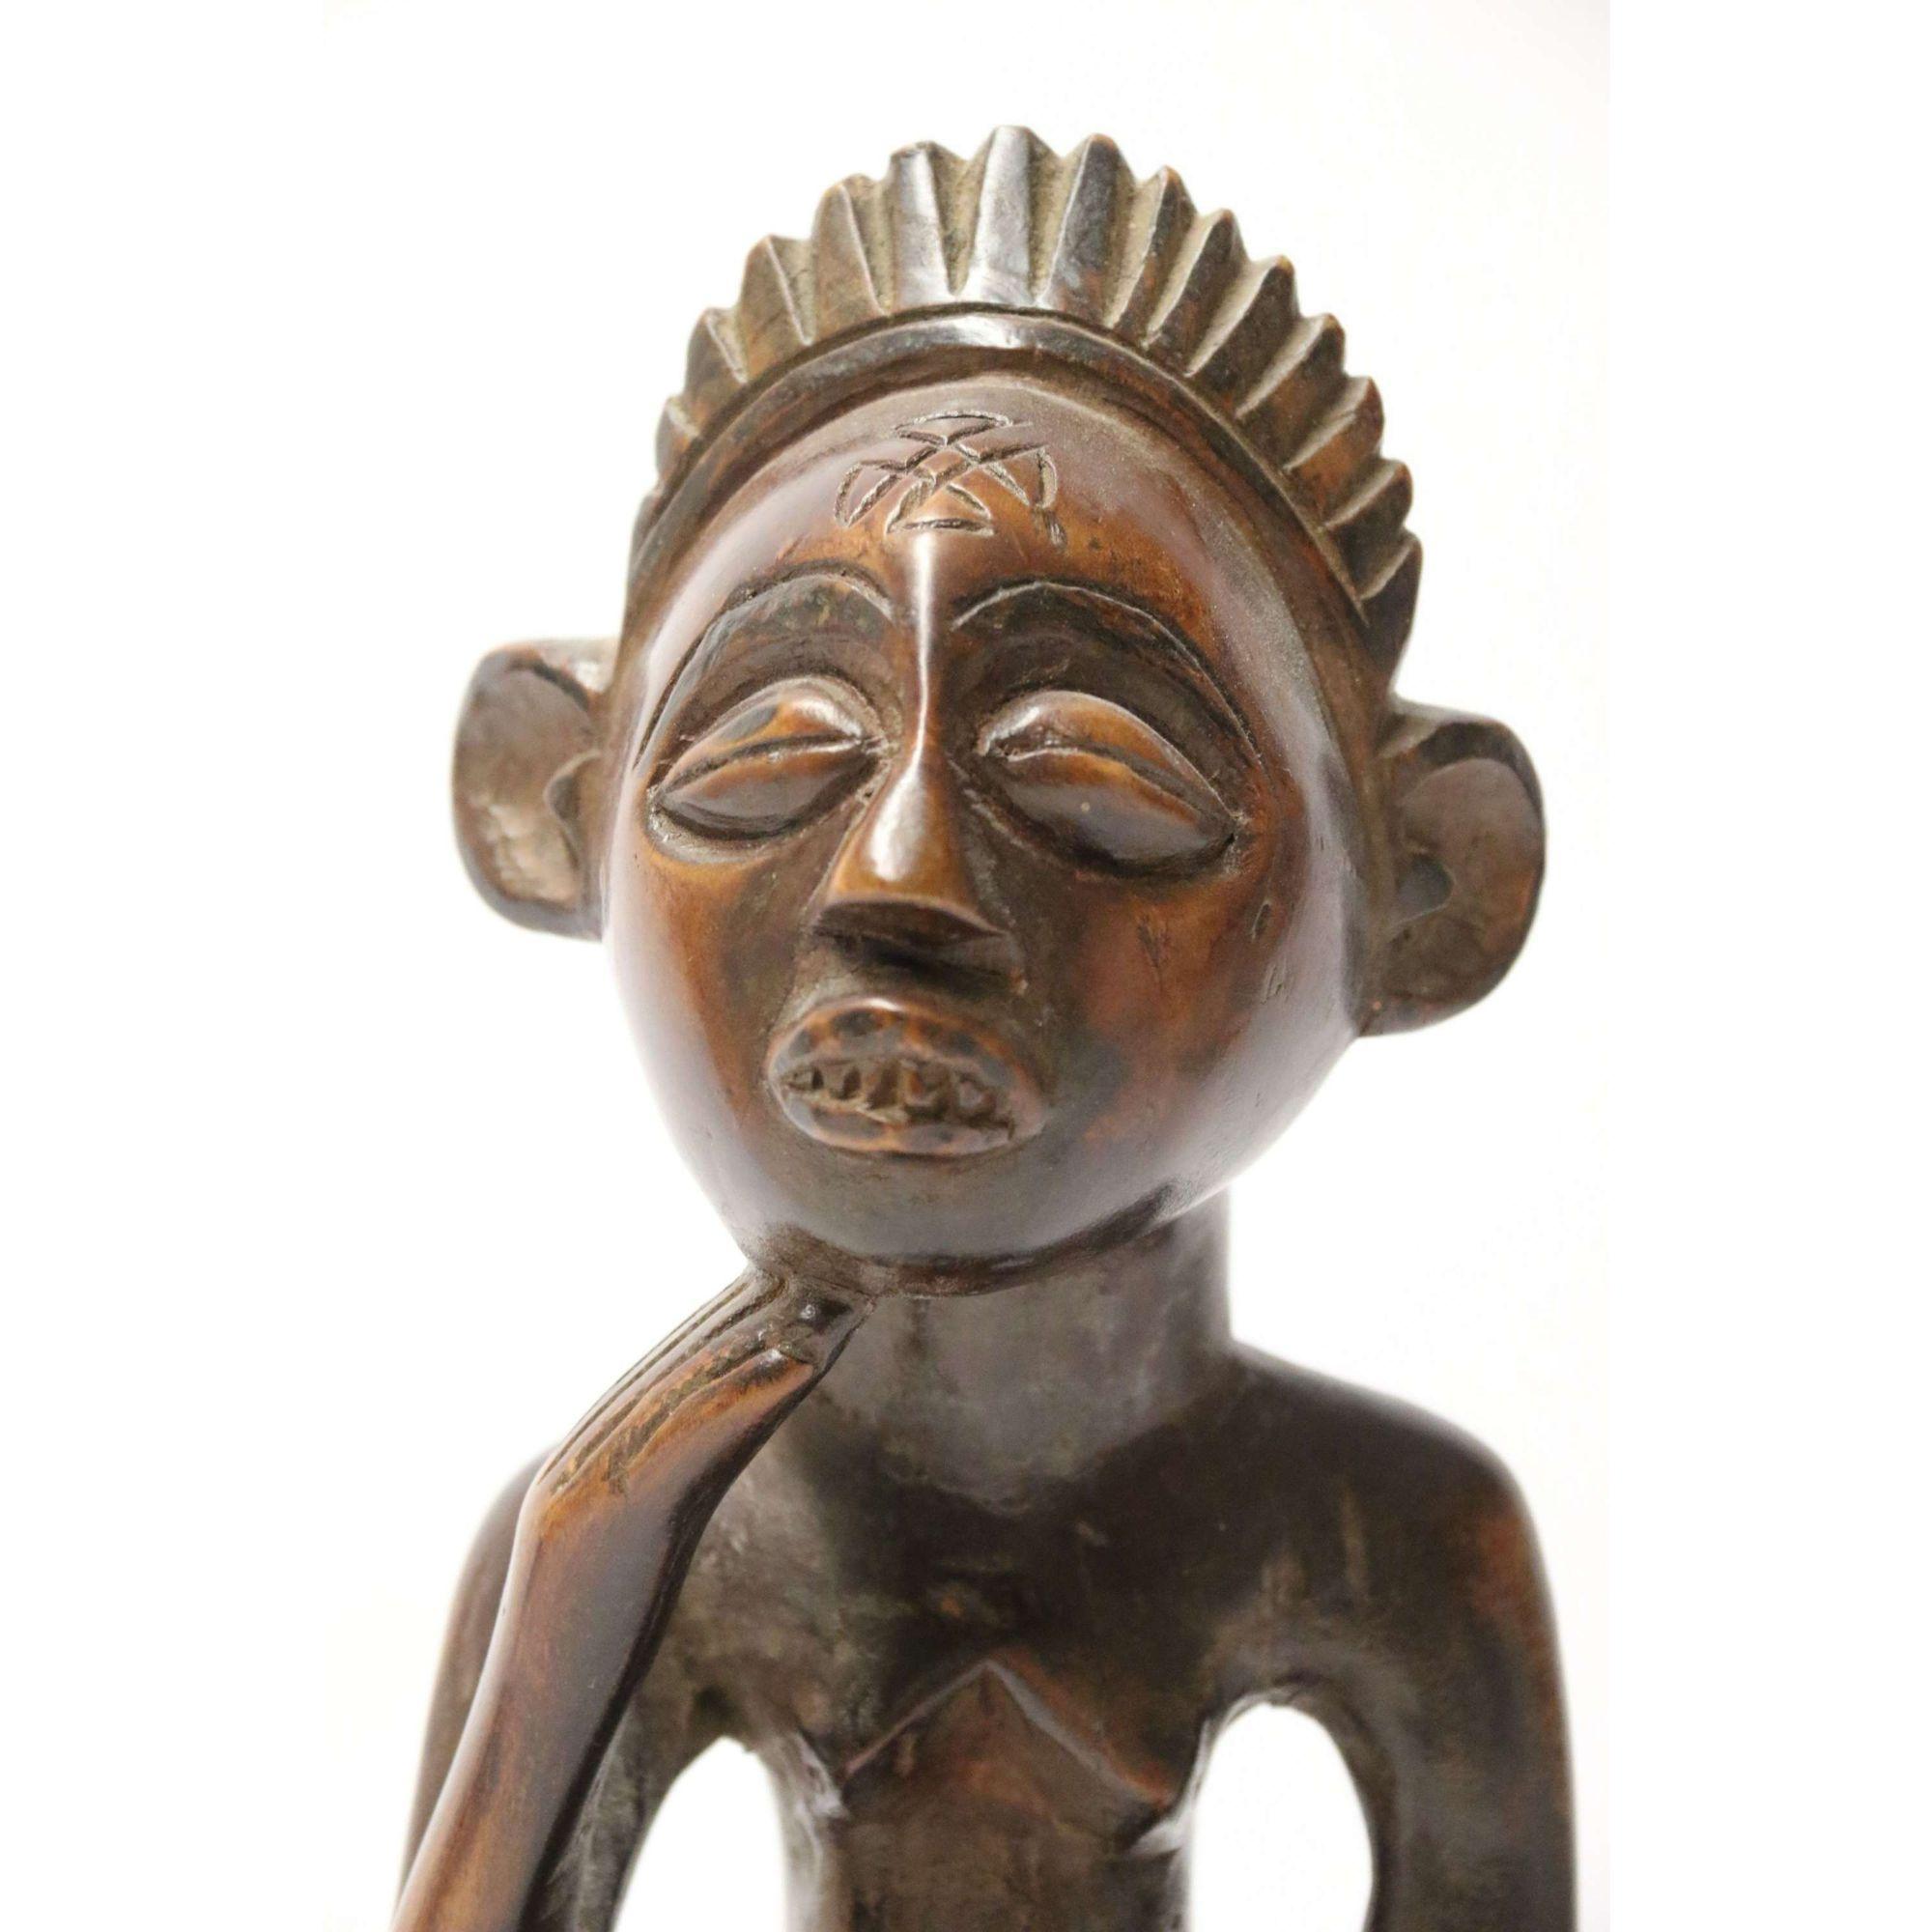 Primitive Angola Tribal Carved Hardwood Figure, circa 1930 For Sale 6